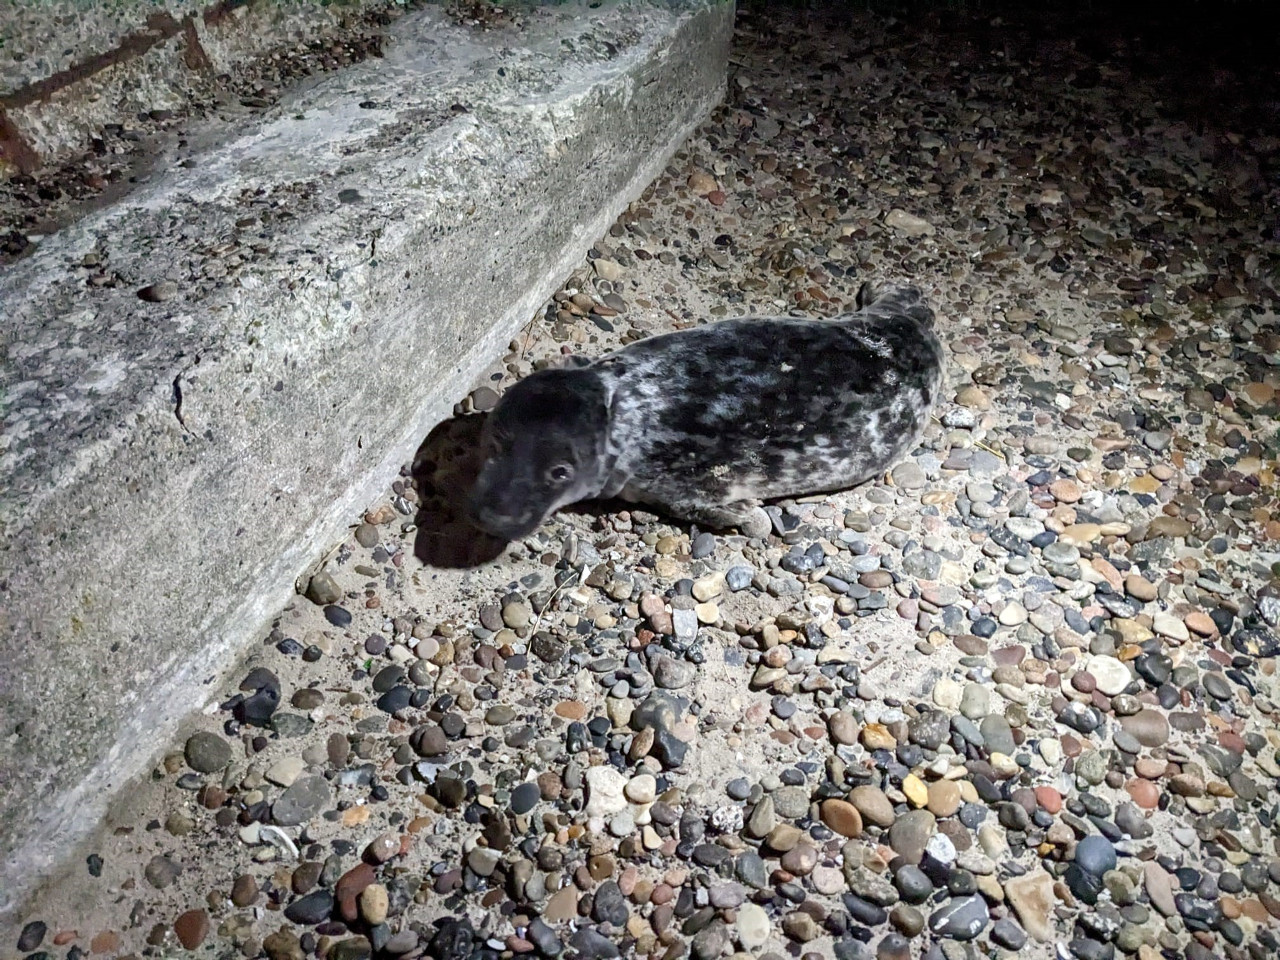 grey seal feb